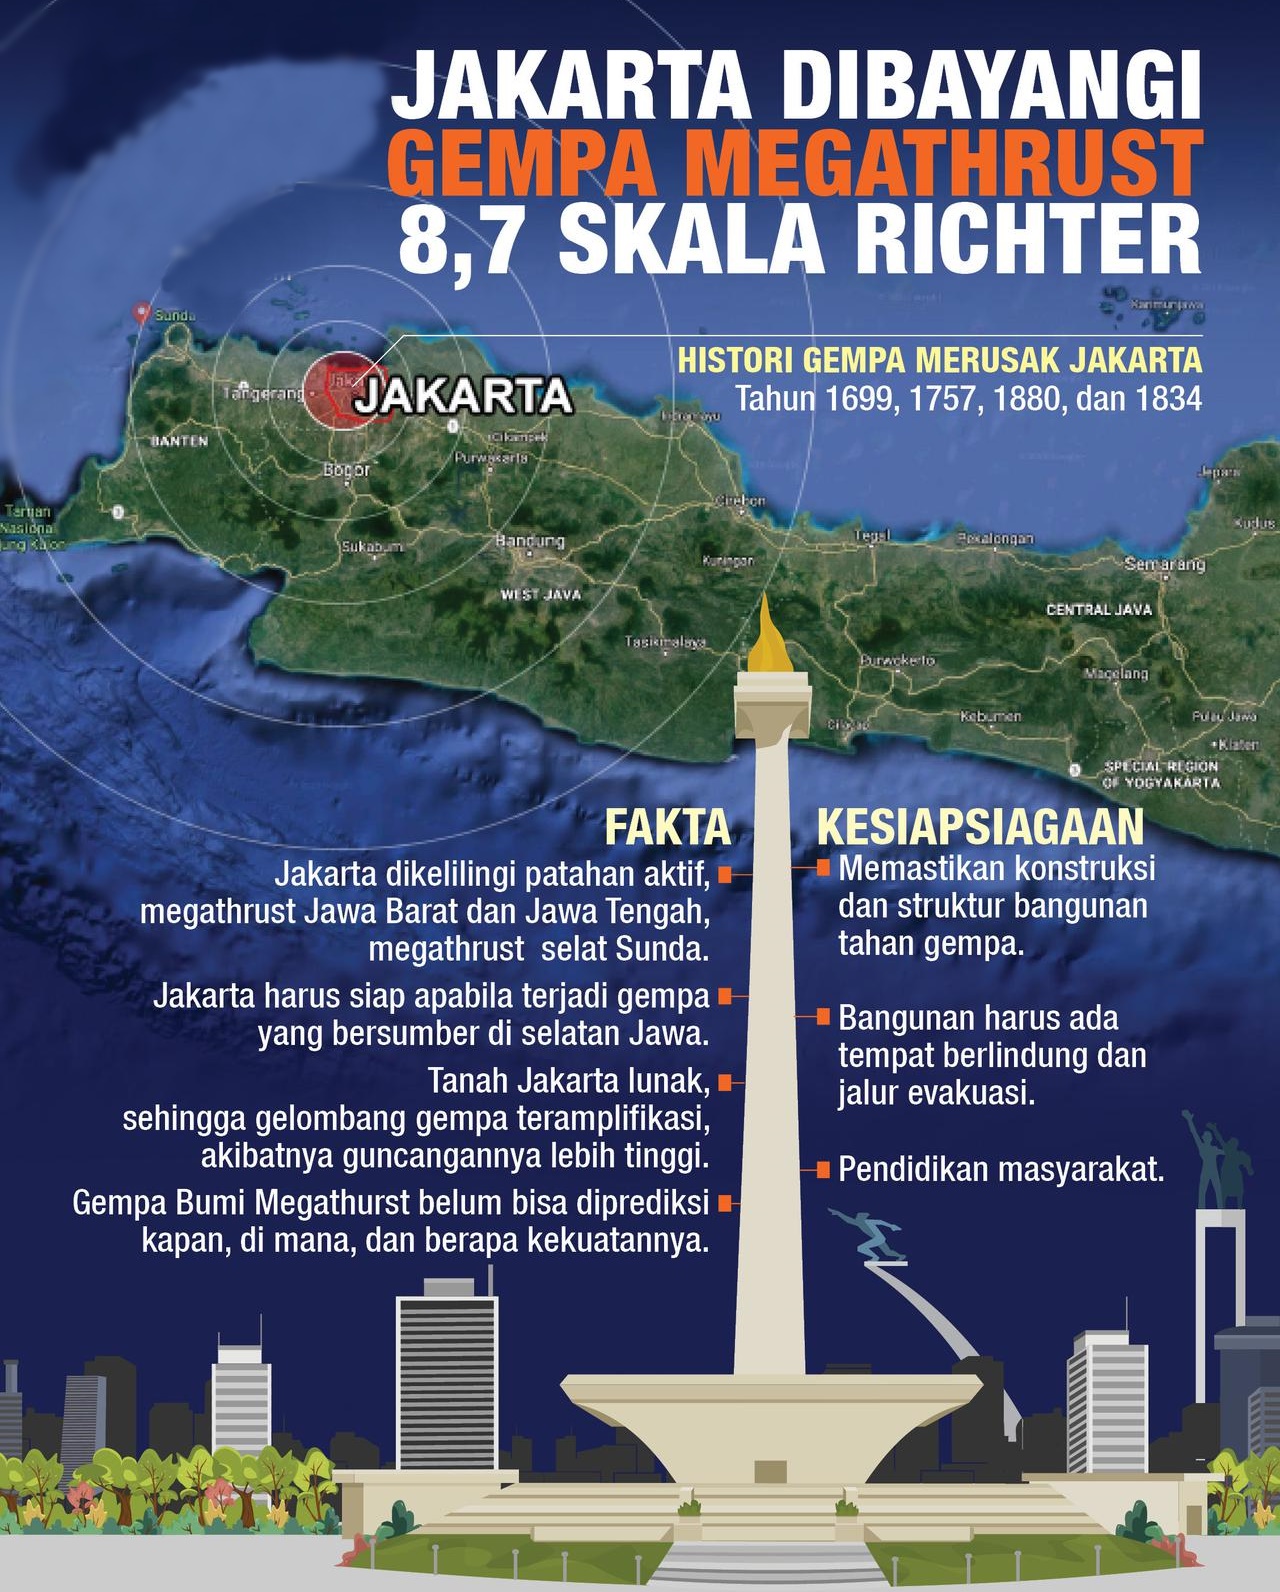 005478900_1519999238-Infografis_Jakarta_Gempa_Megathrust-crop.jpg